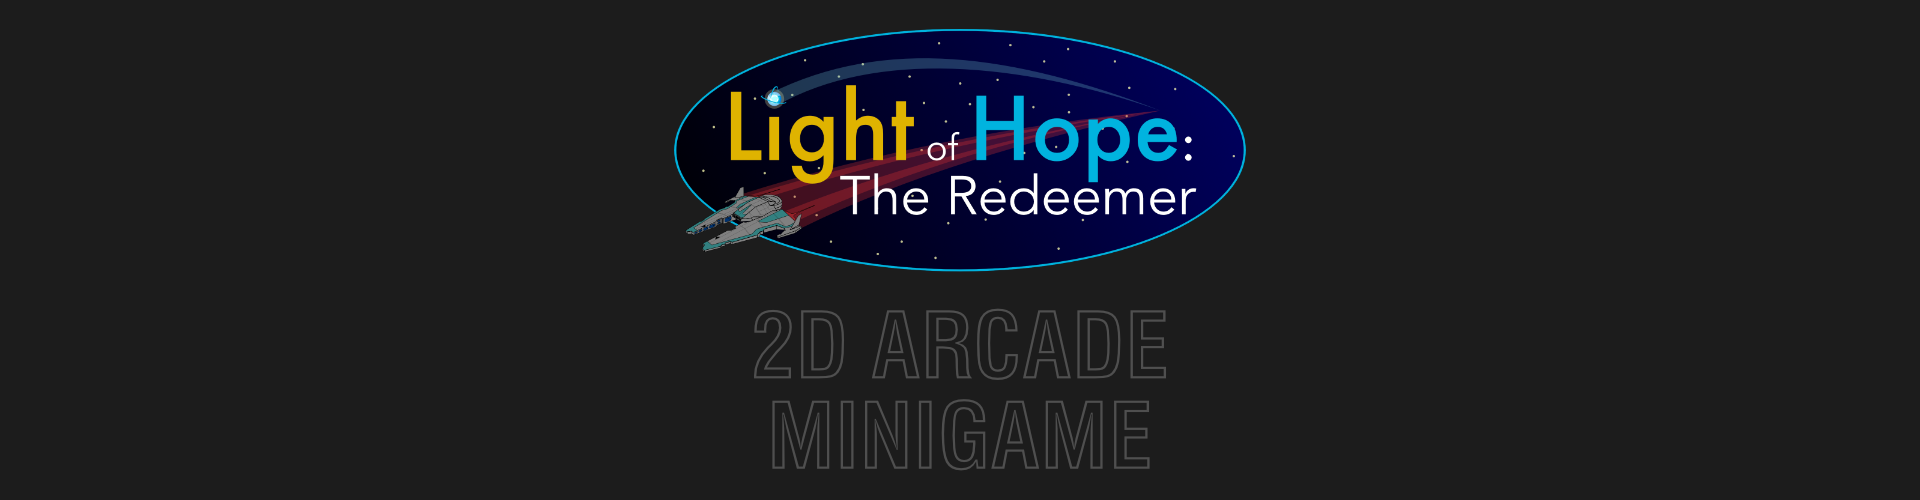 Light of Hope: The Redeemer [2D Arcade Minigame]